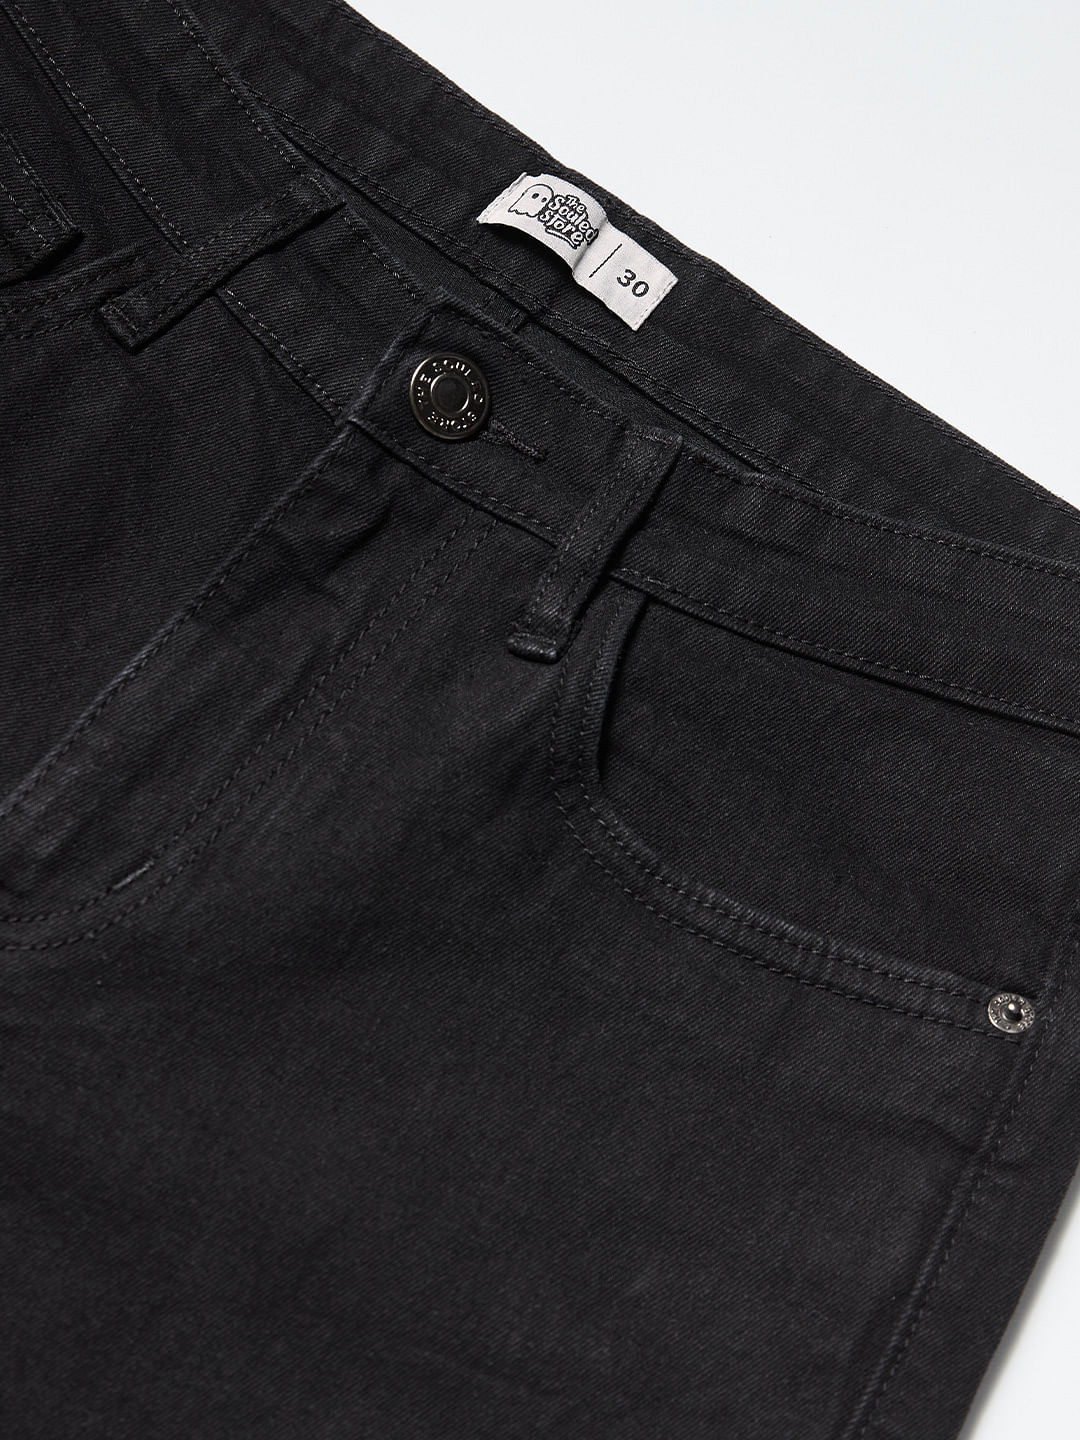 Buy Solids: Ash Grey (Slim Fit) Men Jeans Online